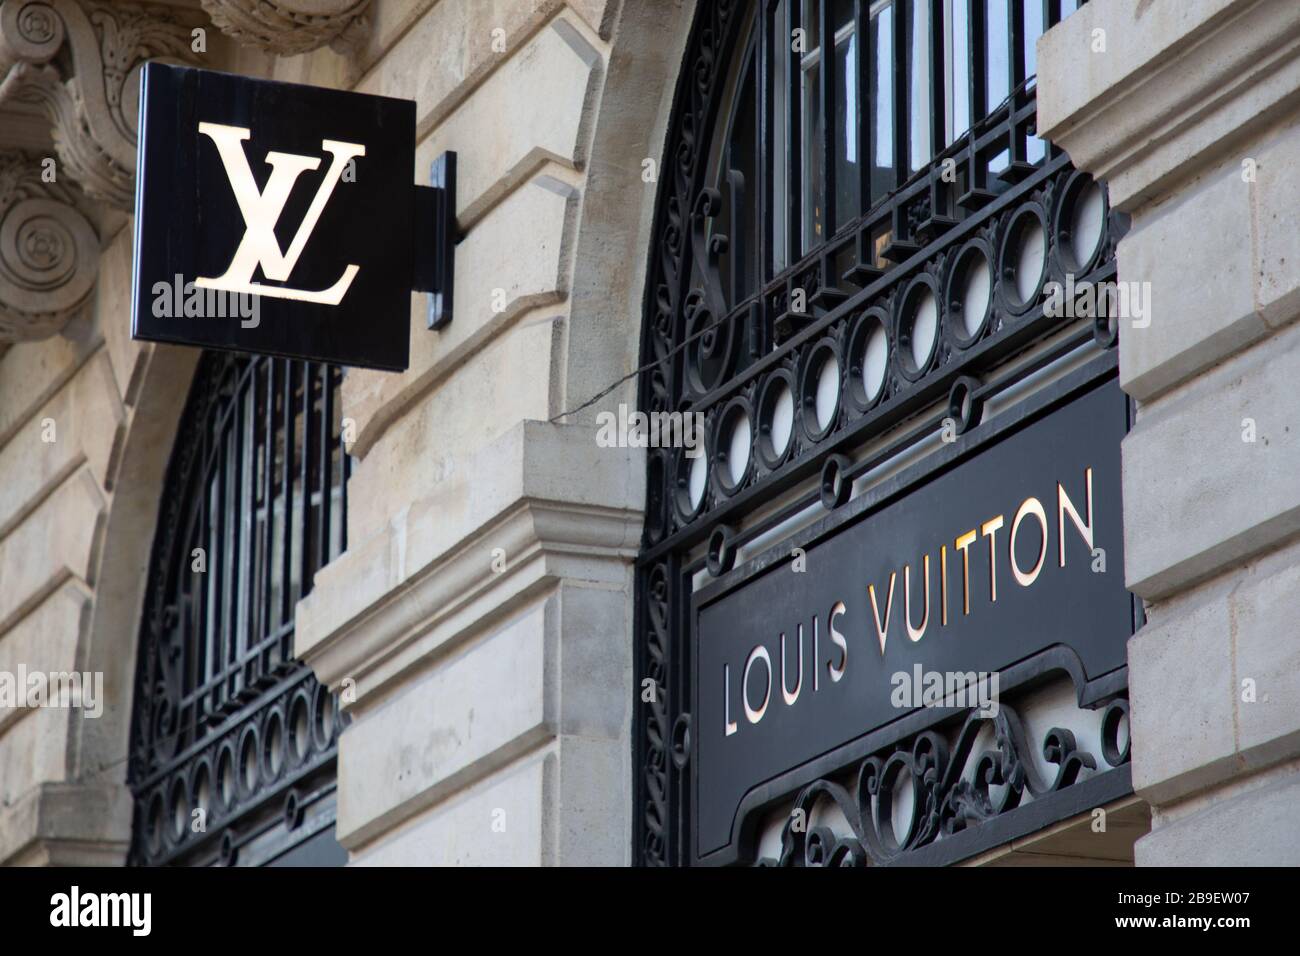 Louis Vuitton Logo Black and White (1) – Brands Logos